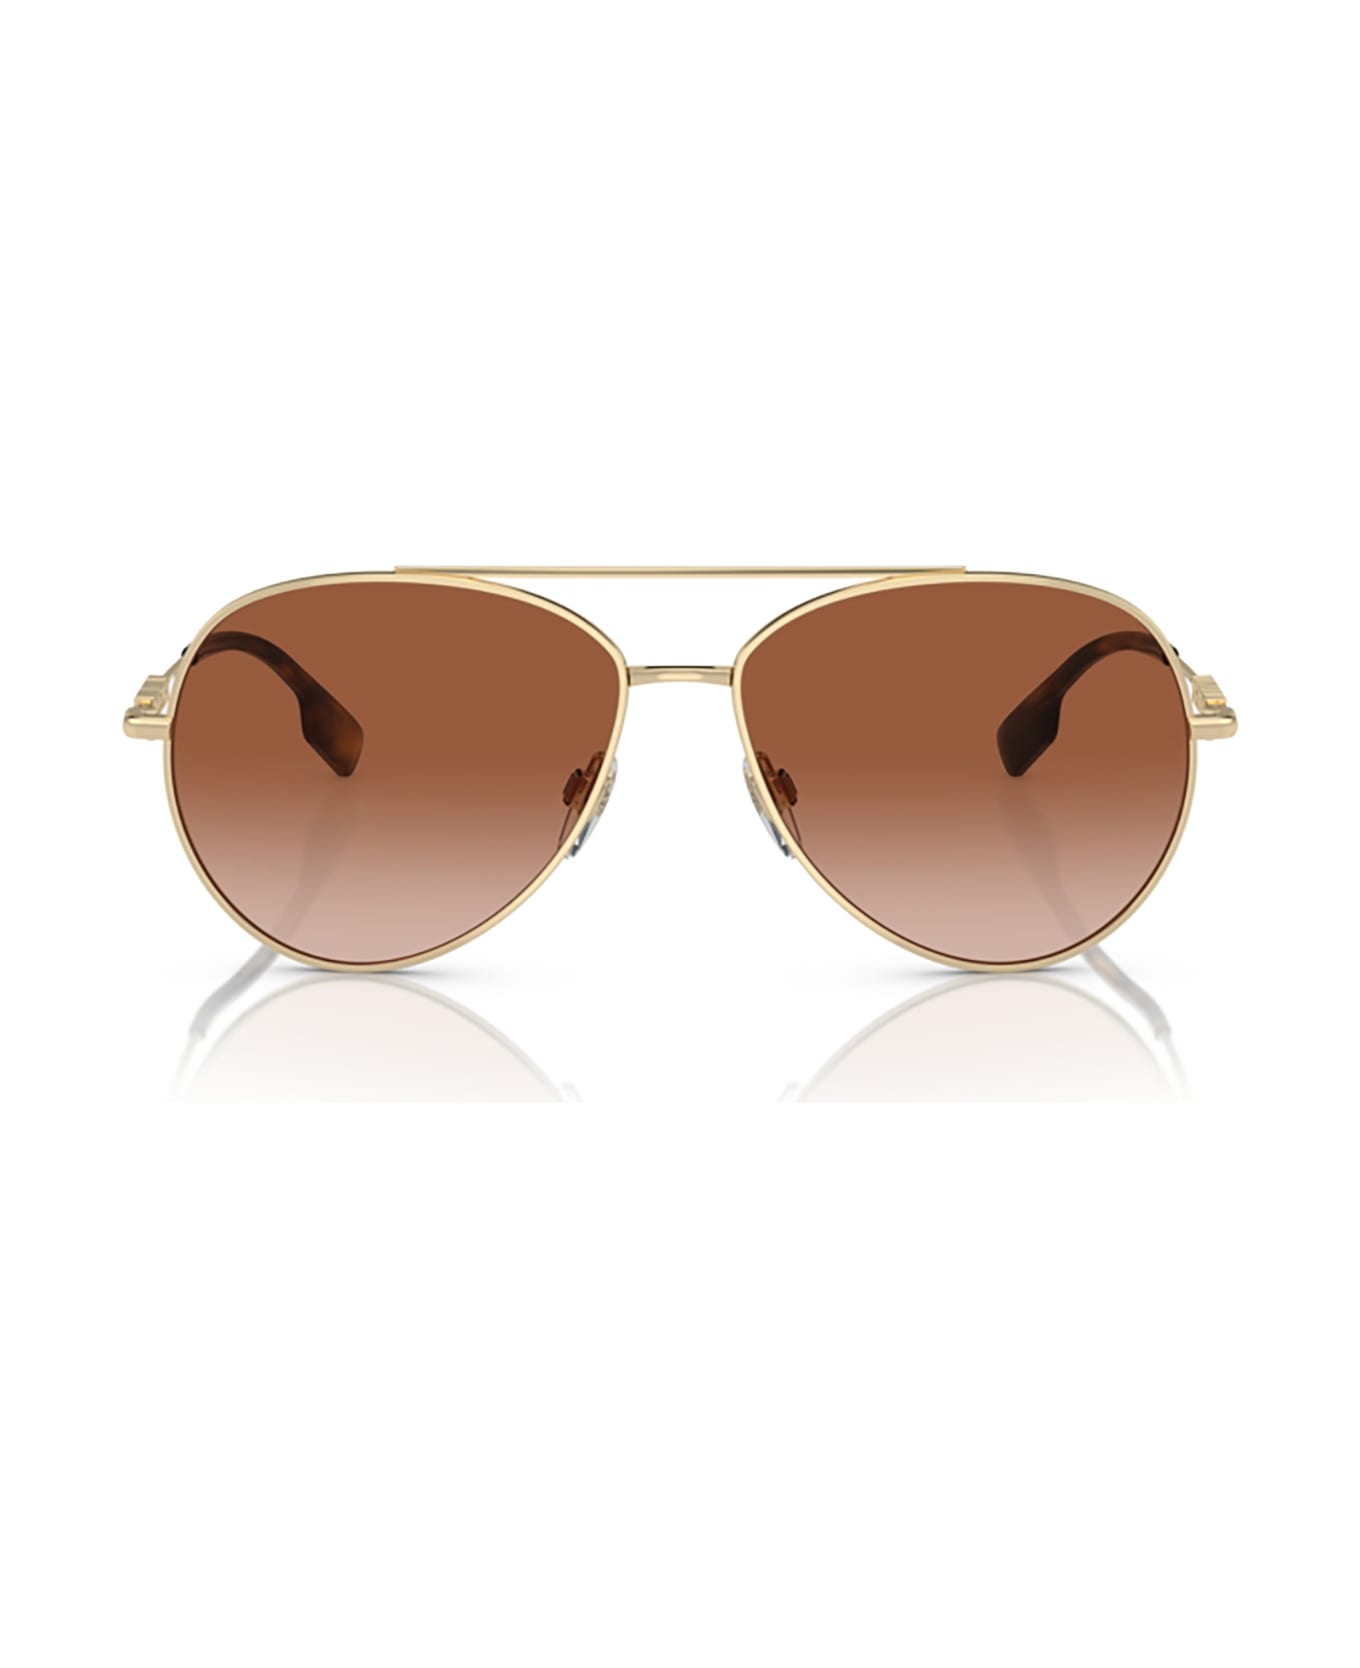 Burberry Eyewear Be3147 Light Gold Sunglasses - Light gold